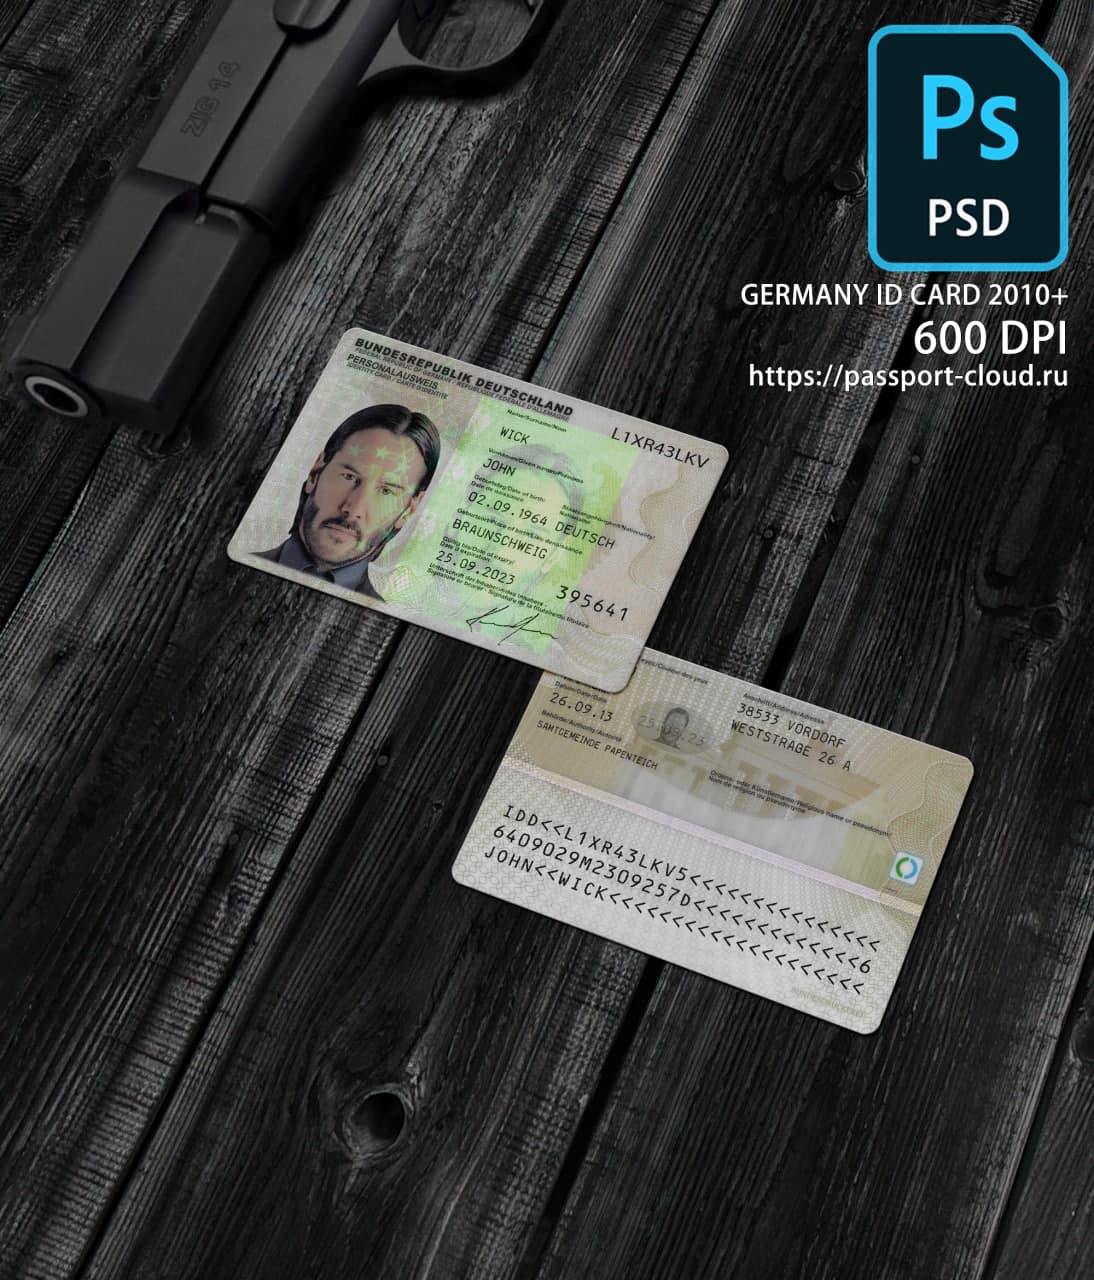 Germany ID Card 2010+ PSD1